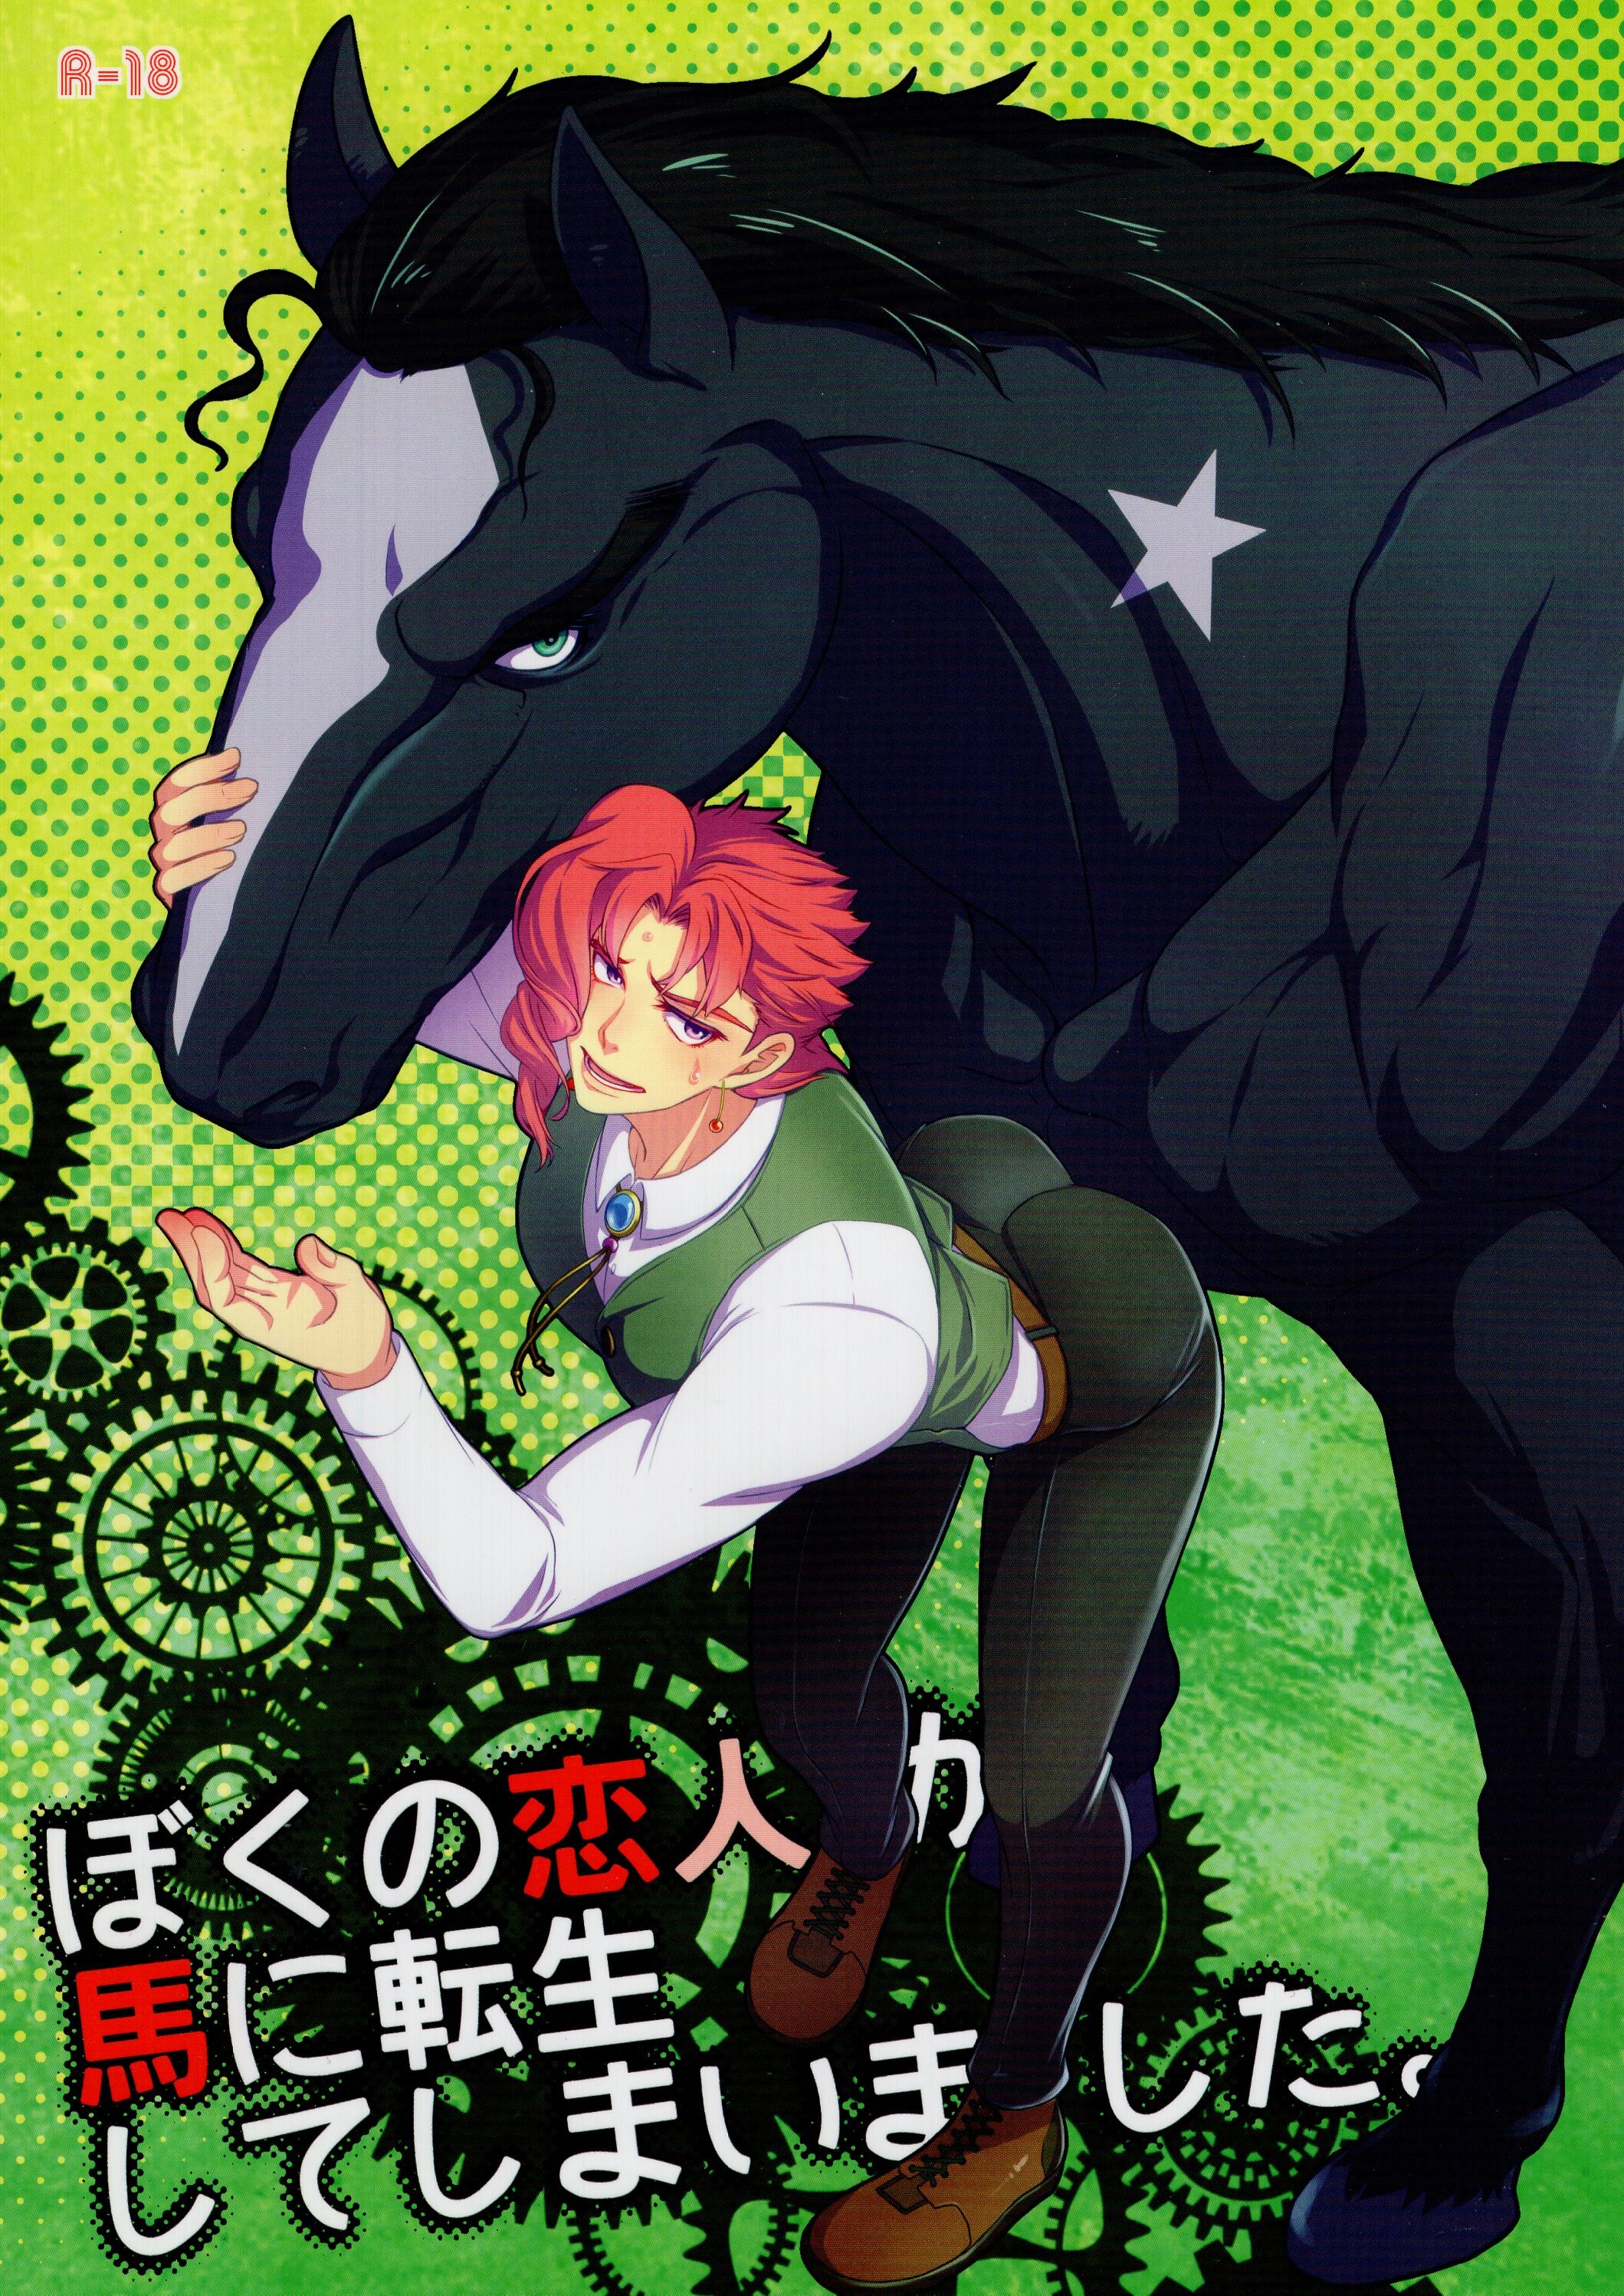 Jotaro horse and kakyoin